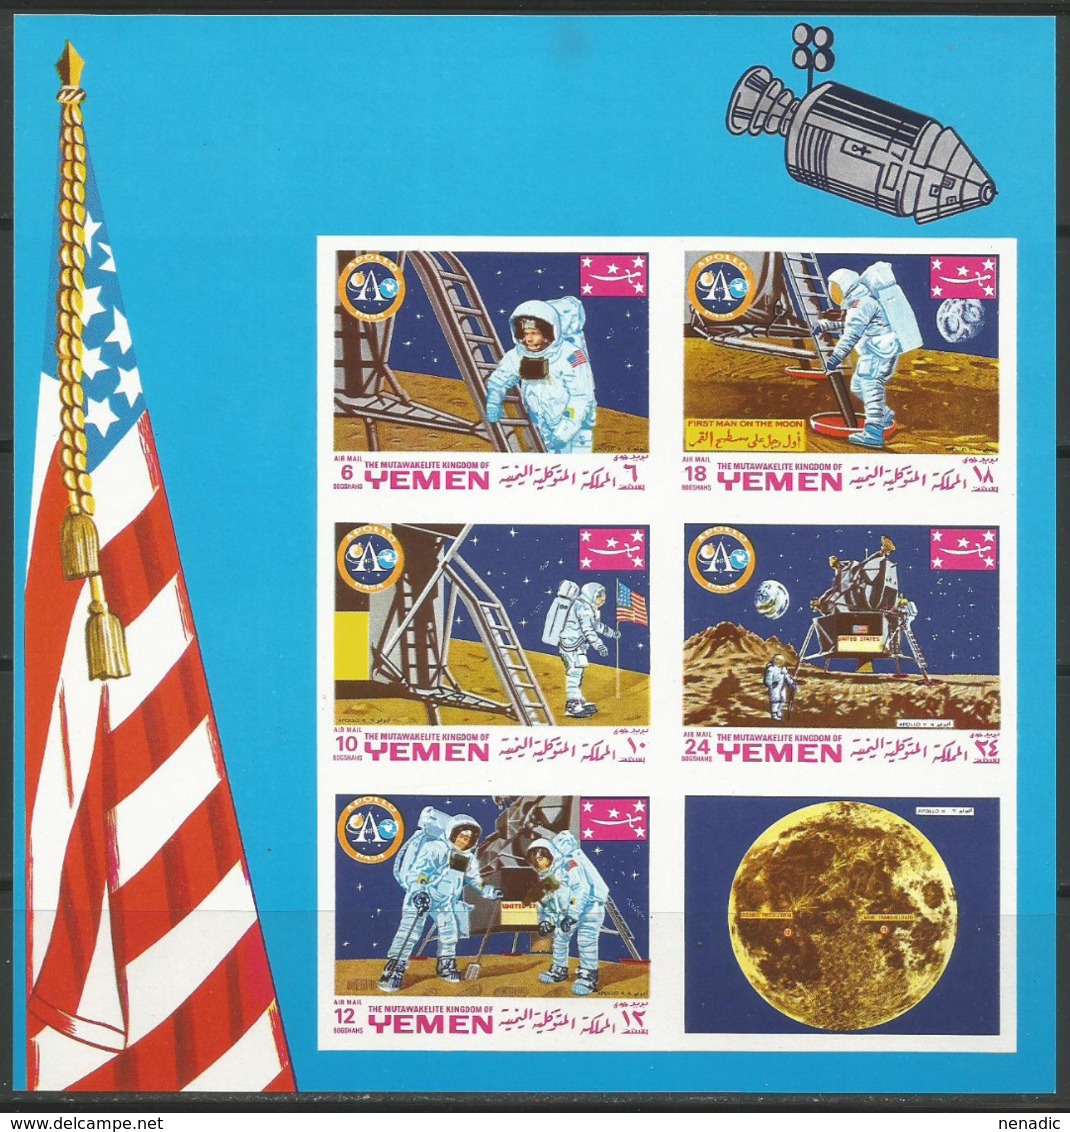 Yemen,Apollo XI-Landing On The Moon1969.,mini Sheet-imperforated,MNH - Yemen